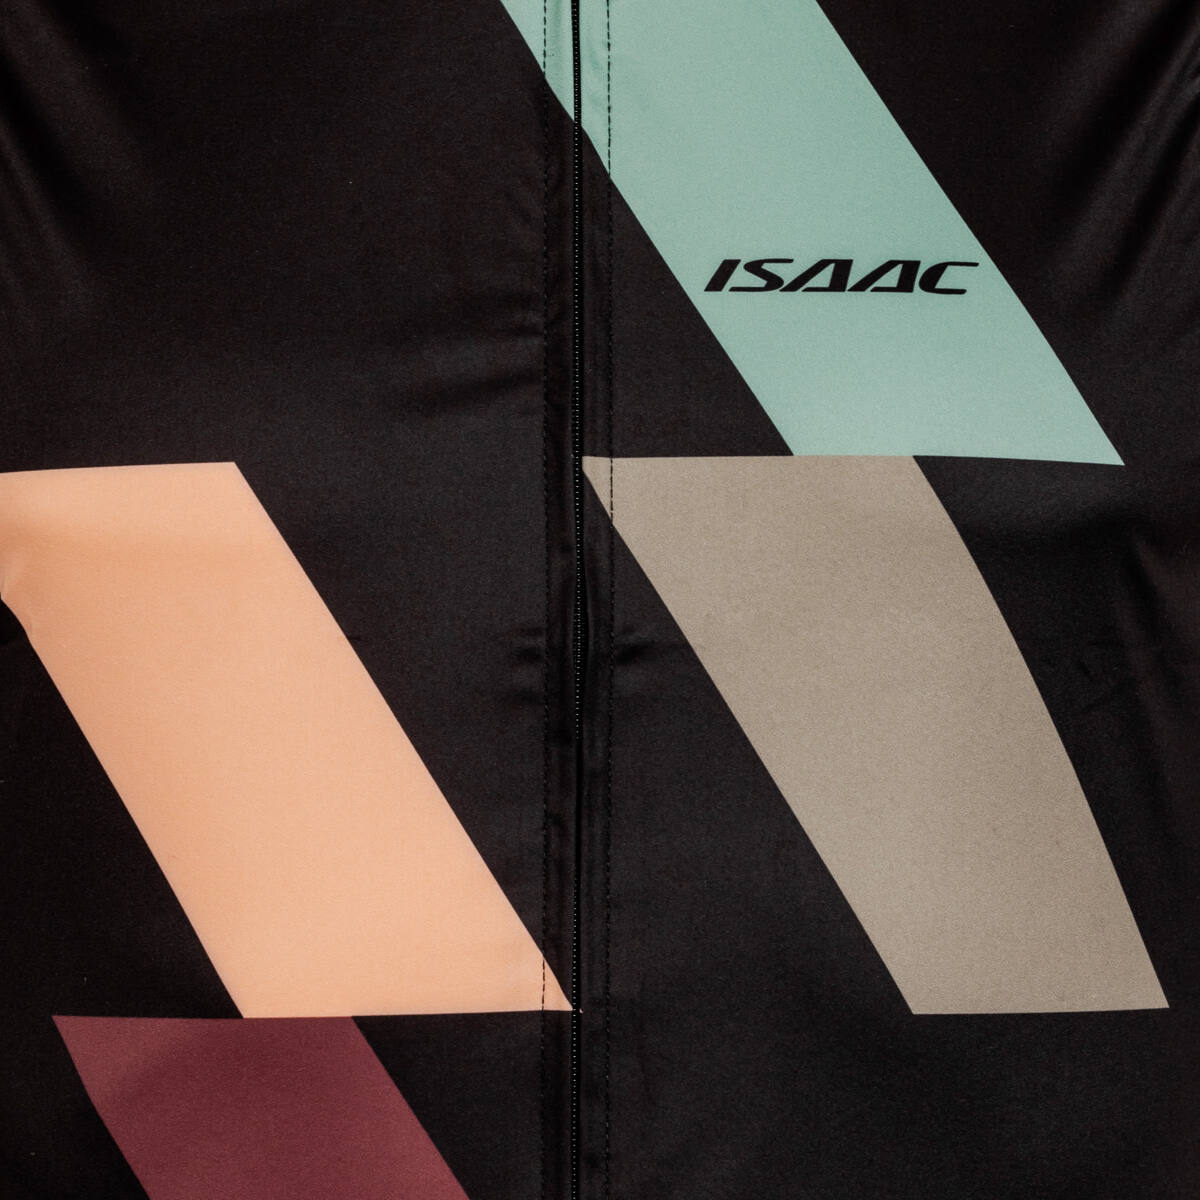 Isaac - Windjacket Teamwear size S